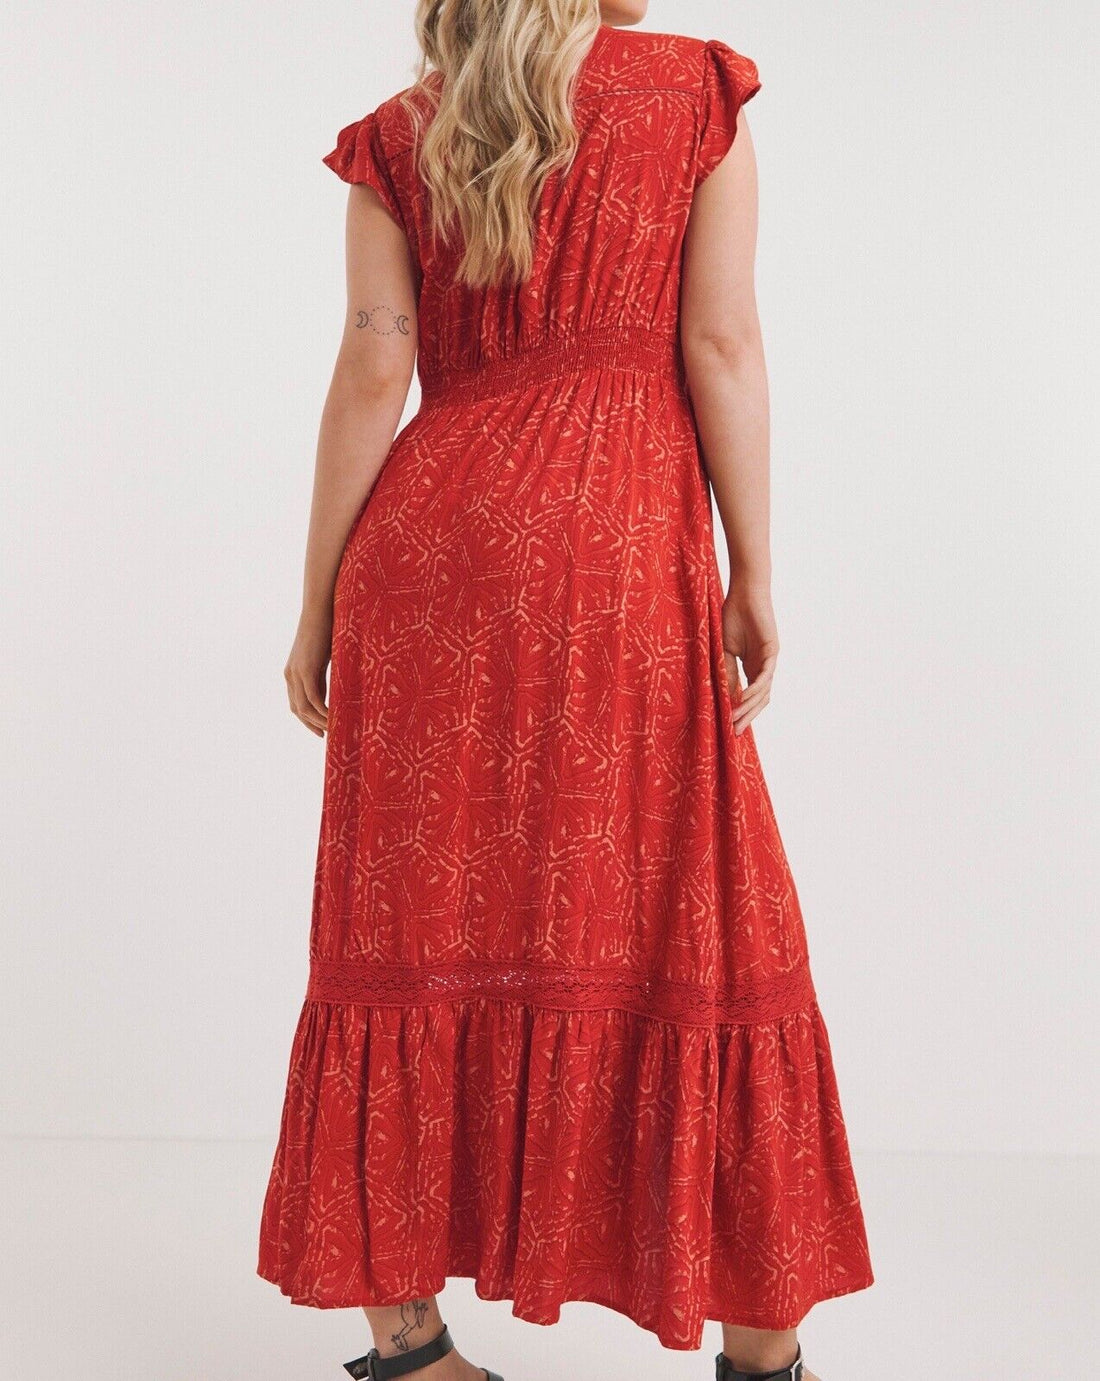 EX Joe Brown Red Printed Lace Maxi Dress 16 18 20 22 24 26 28 30 32 RRP £65